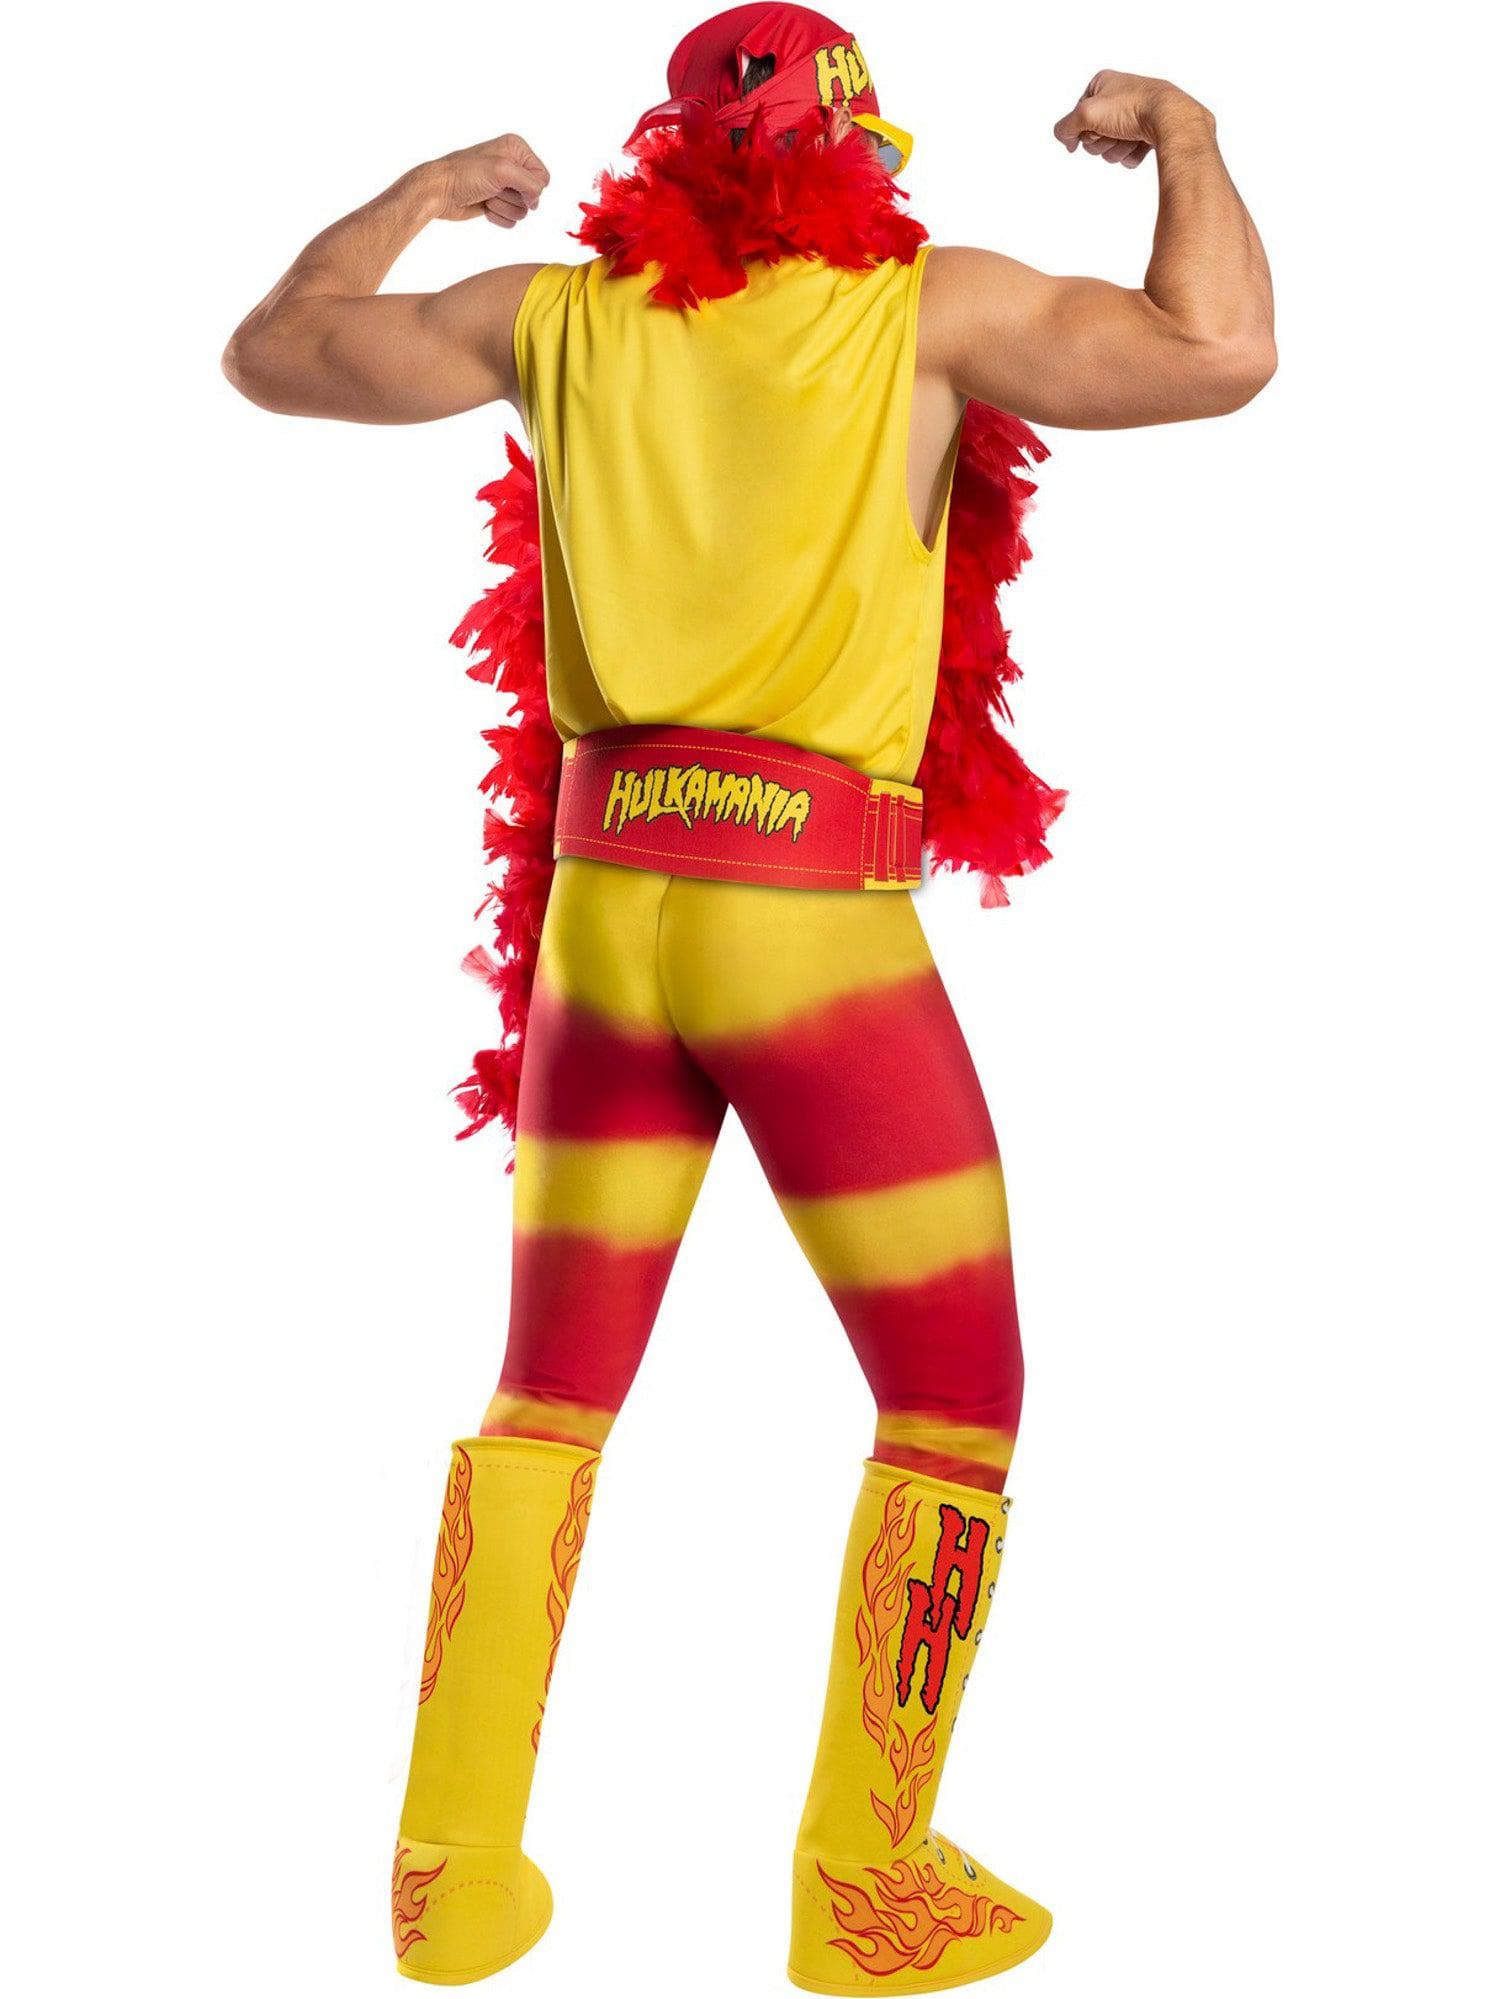 WWE Hulk Hogan Adult Costume - costumes.com